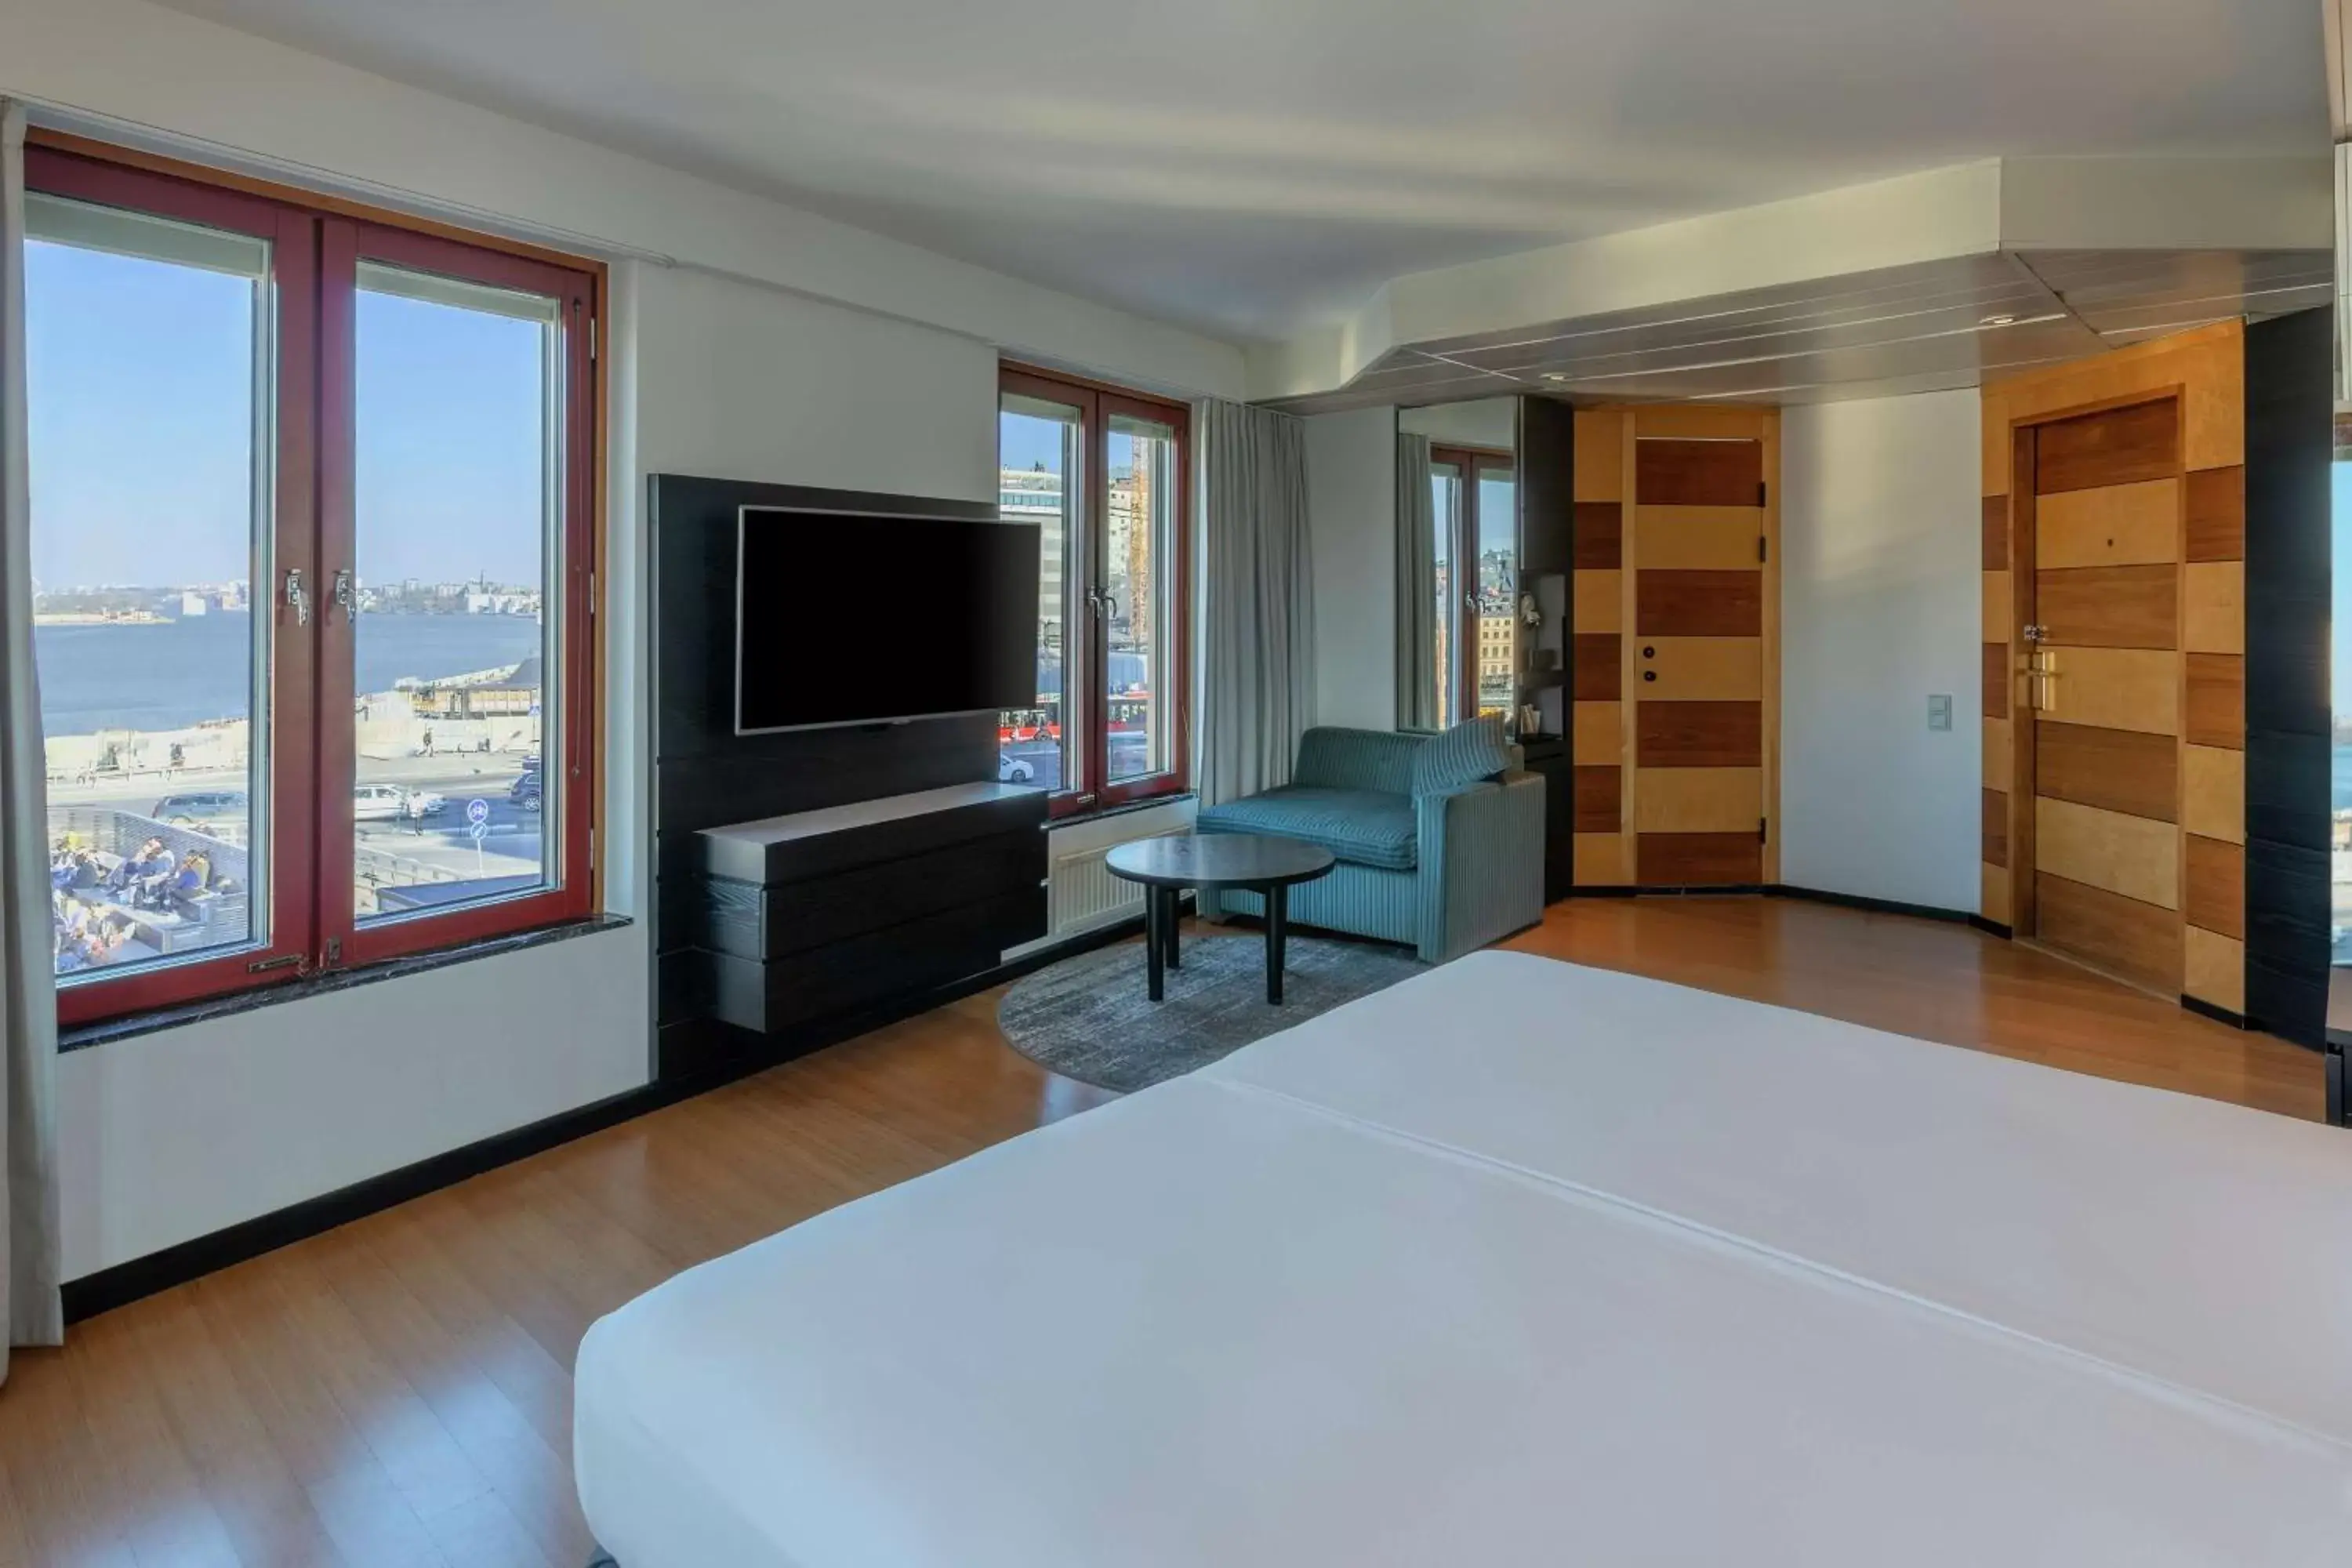 Bedroom in Hilton Stockholm Slussen Hotel